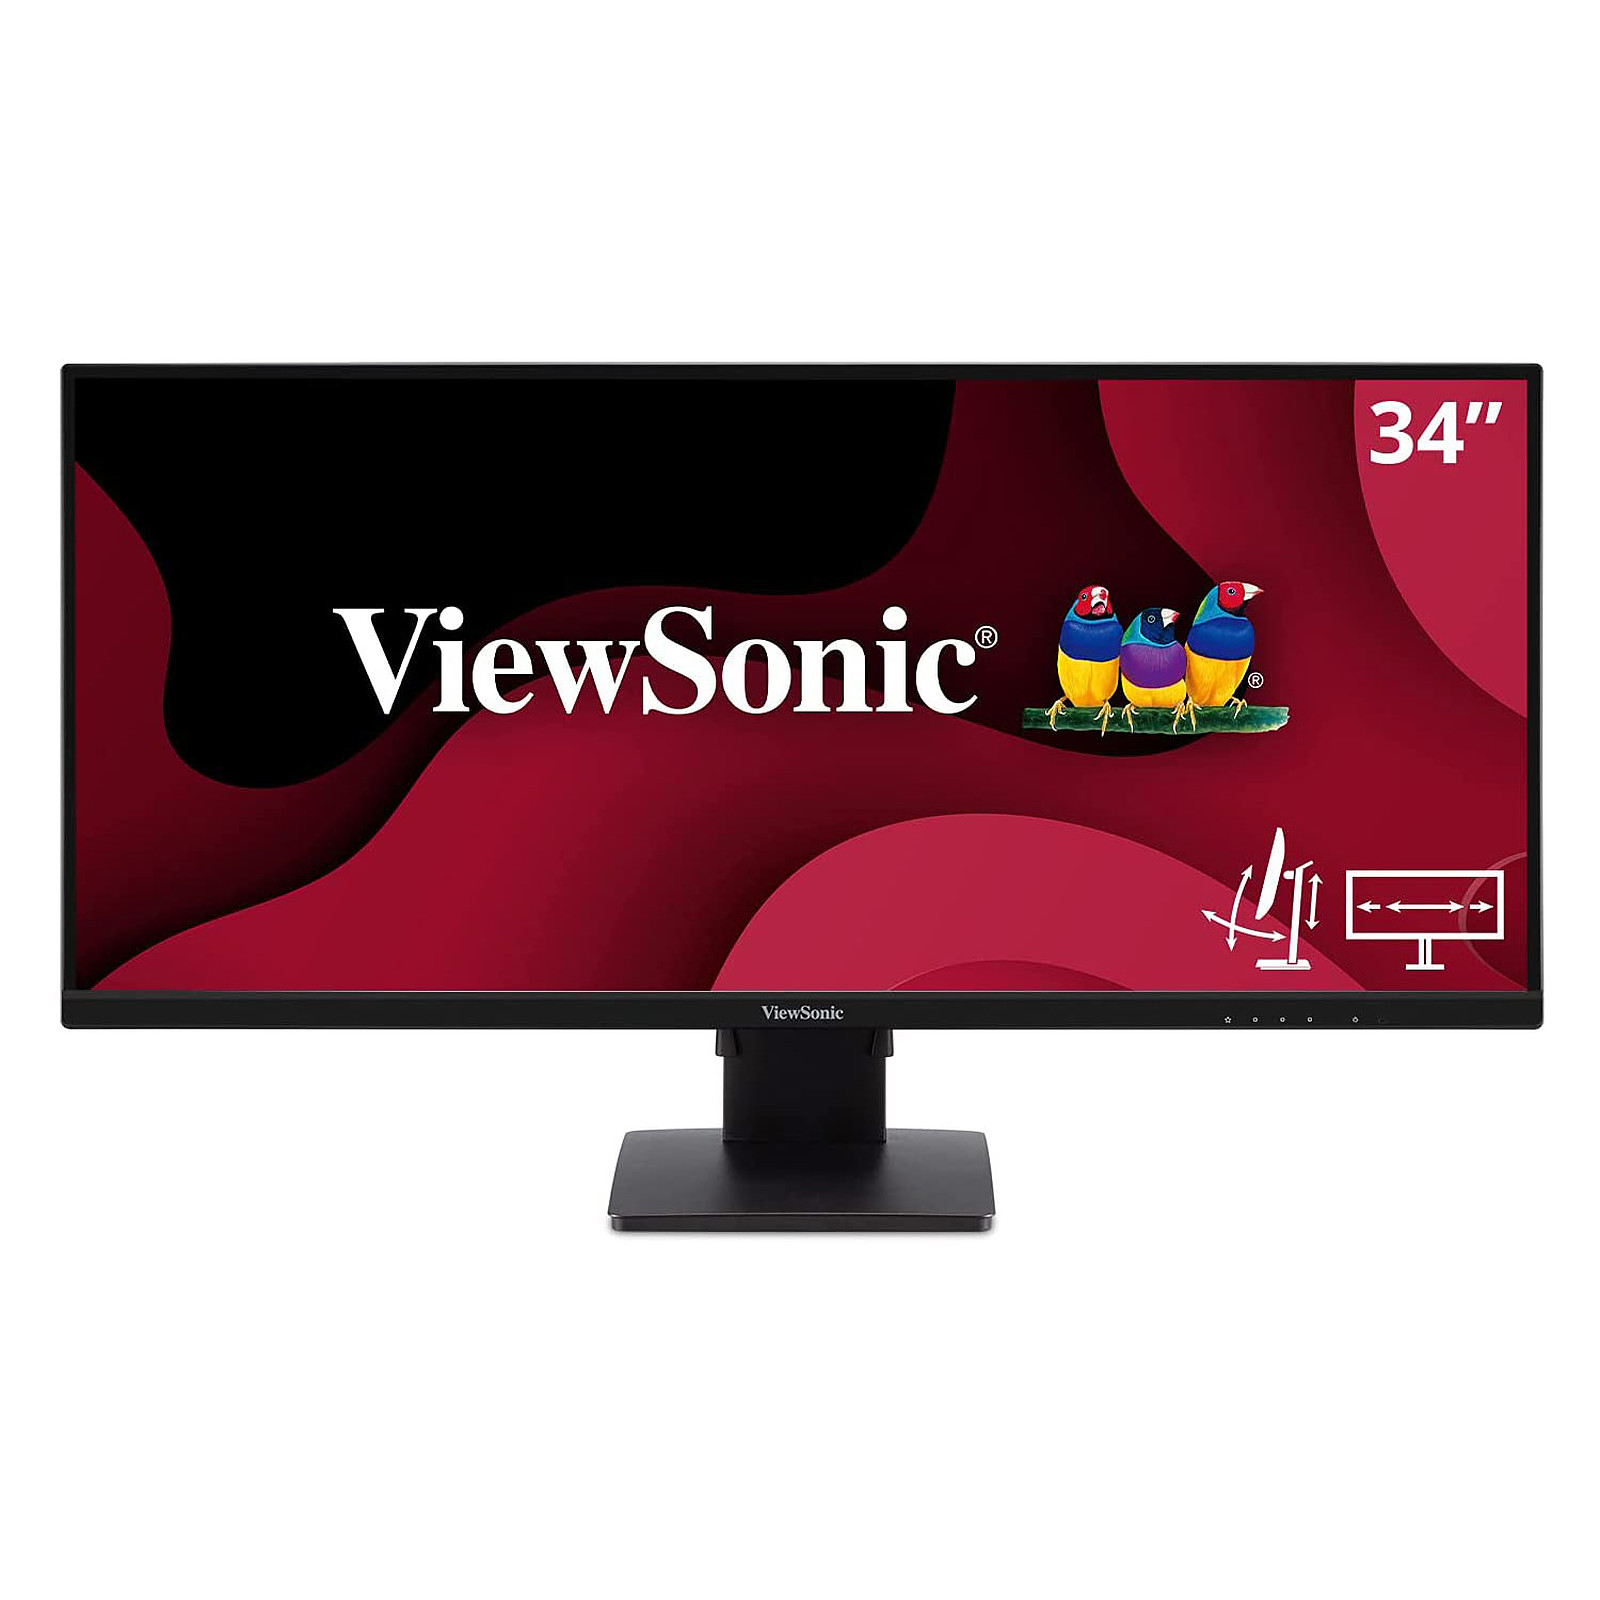 ViewSonic 34" LED - VA3456-mhdj - Ecran PC ViewSonic